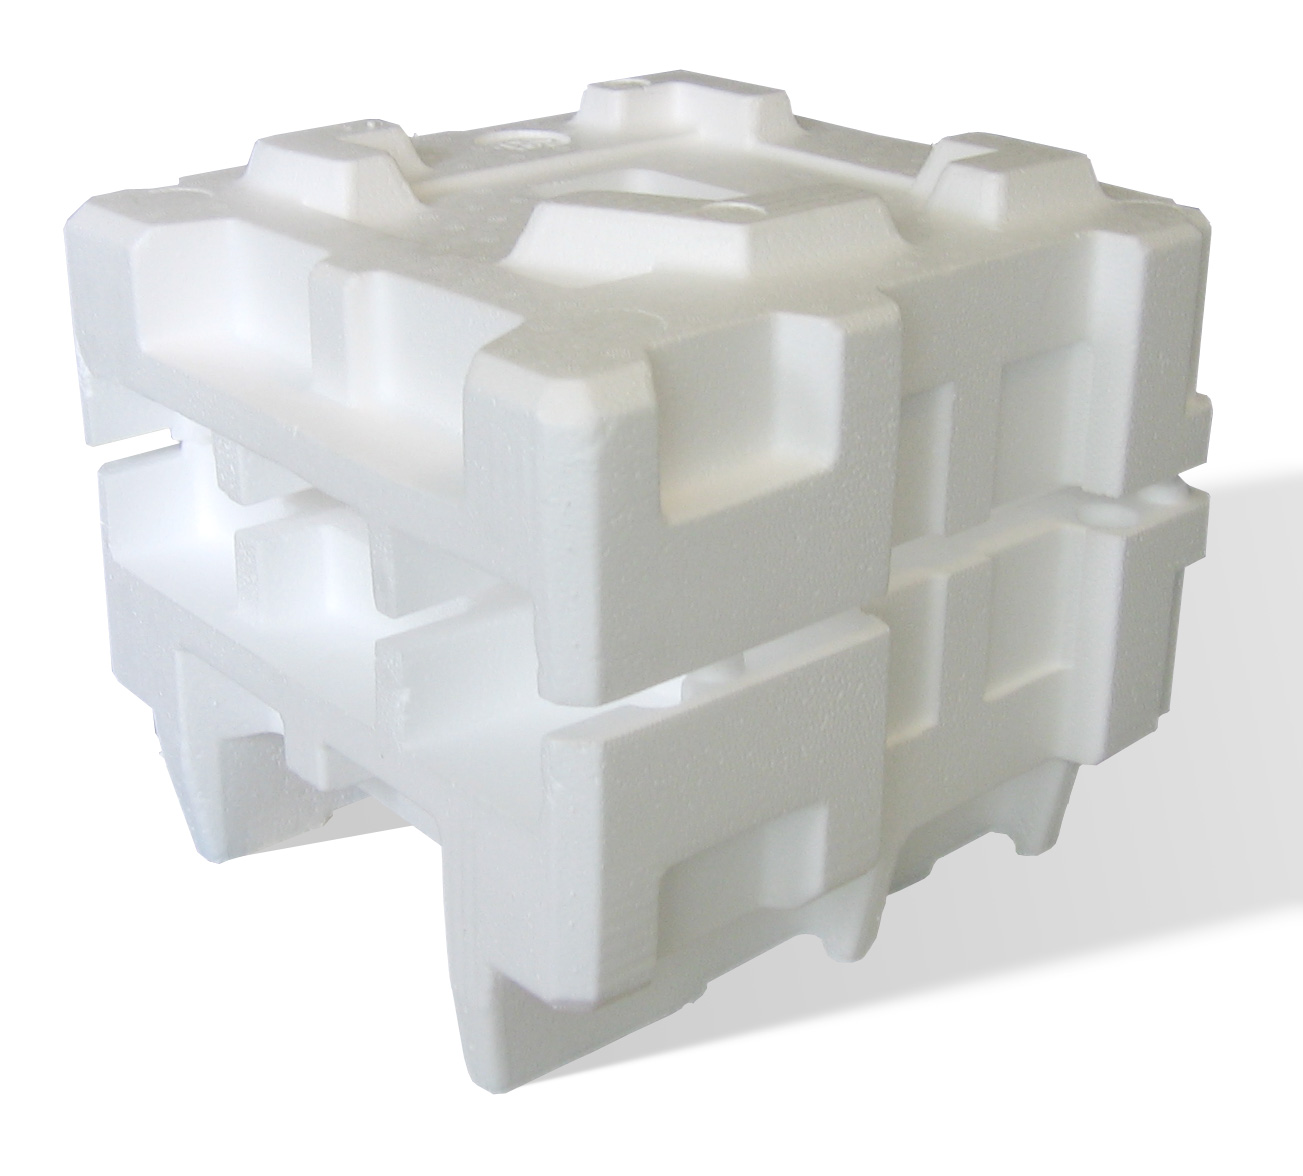 expanded polystyrene foam packaging